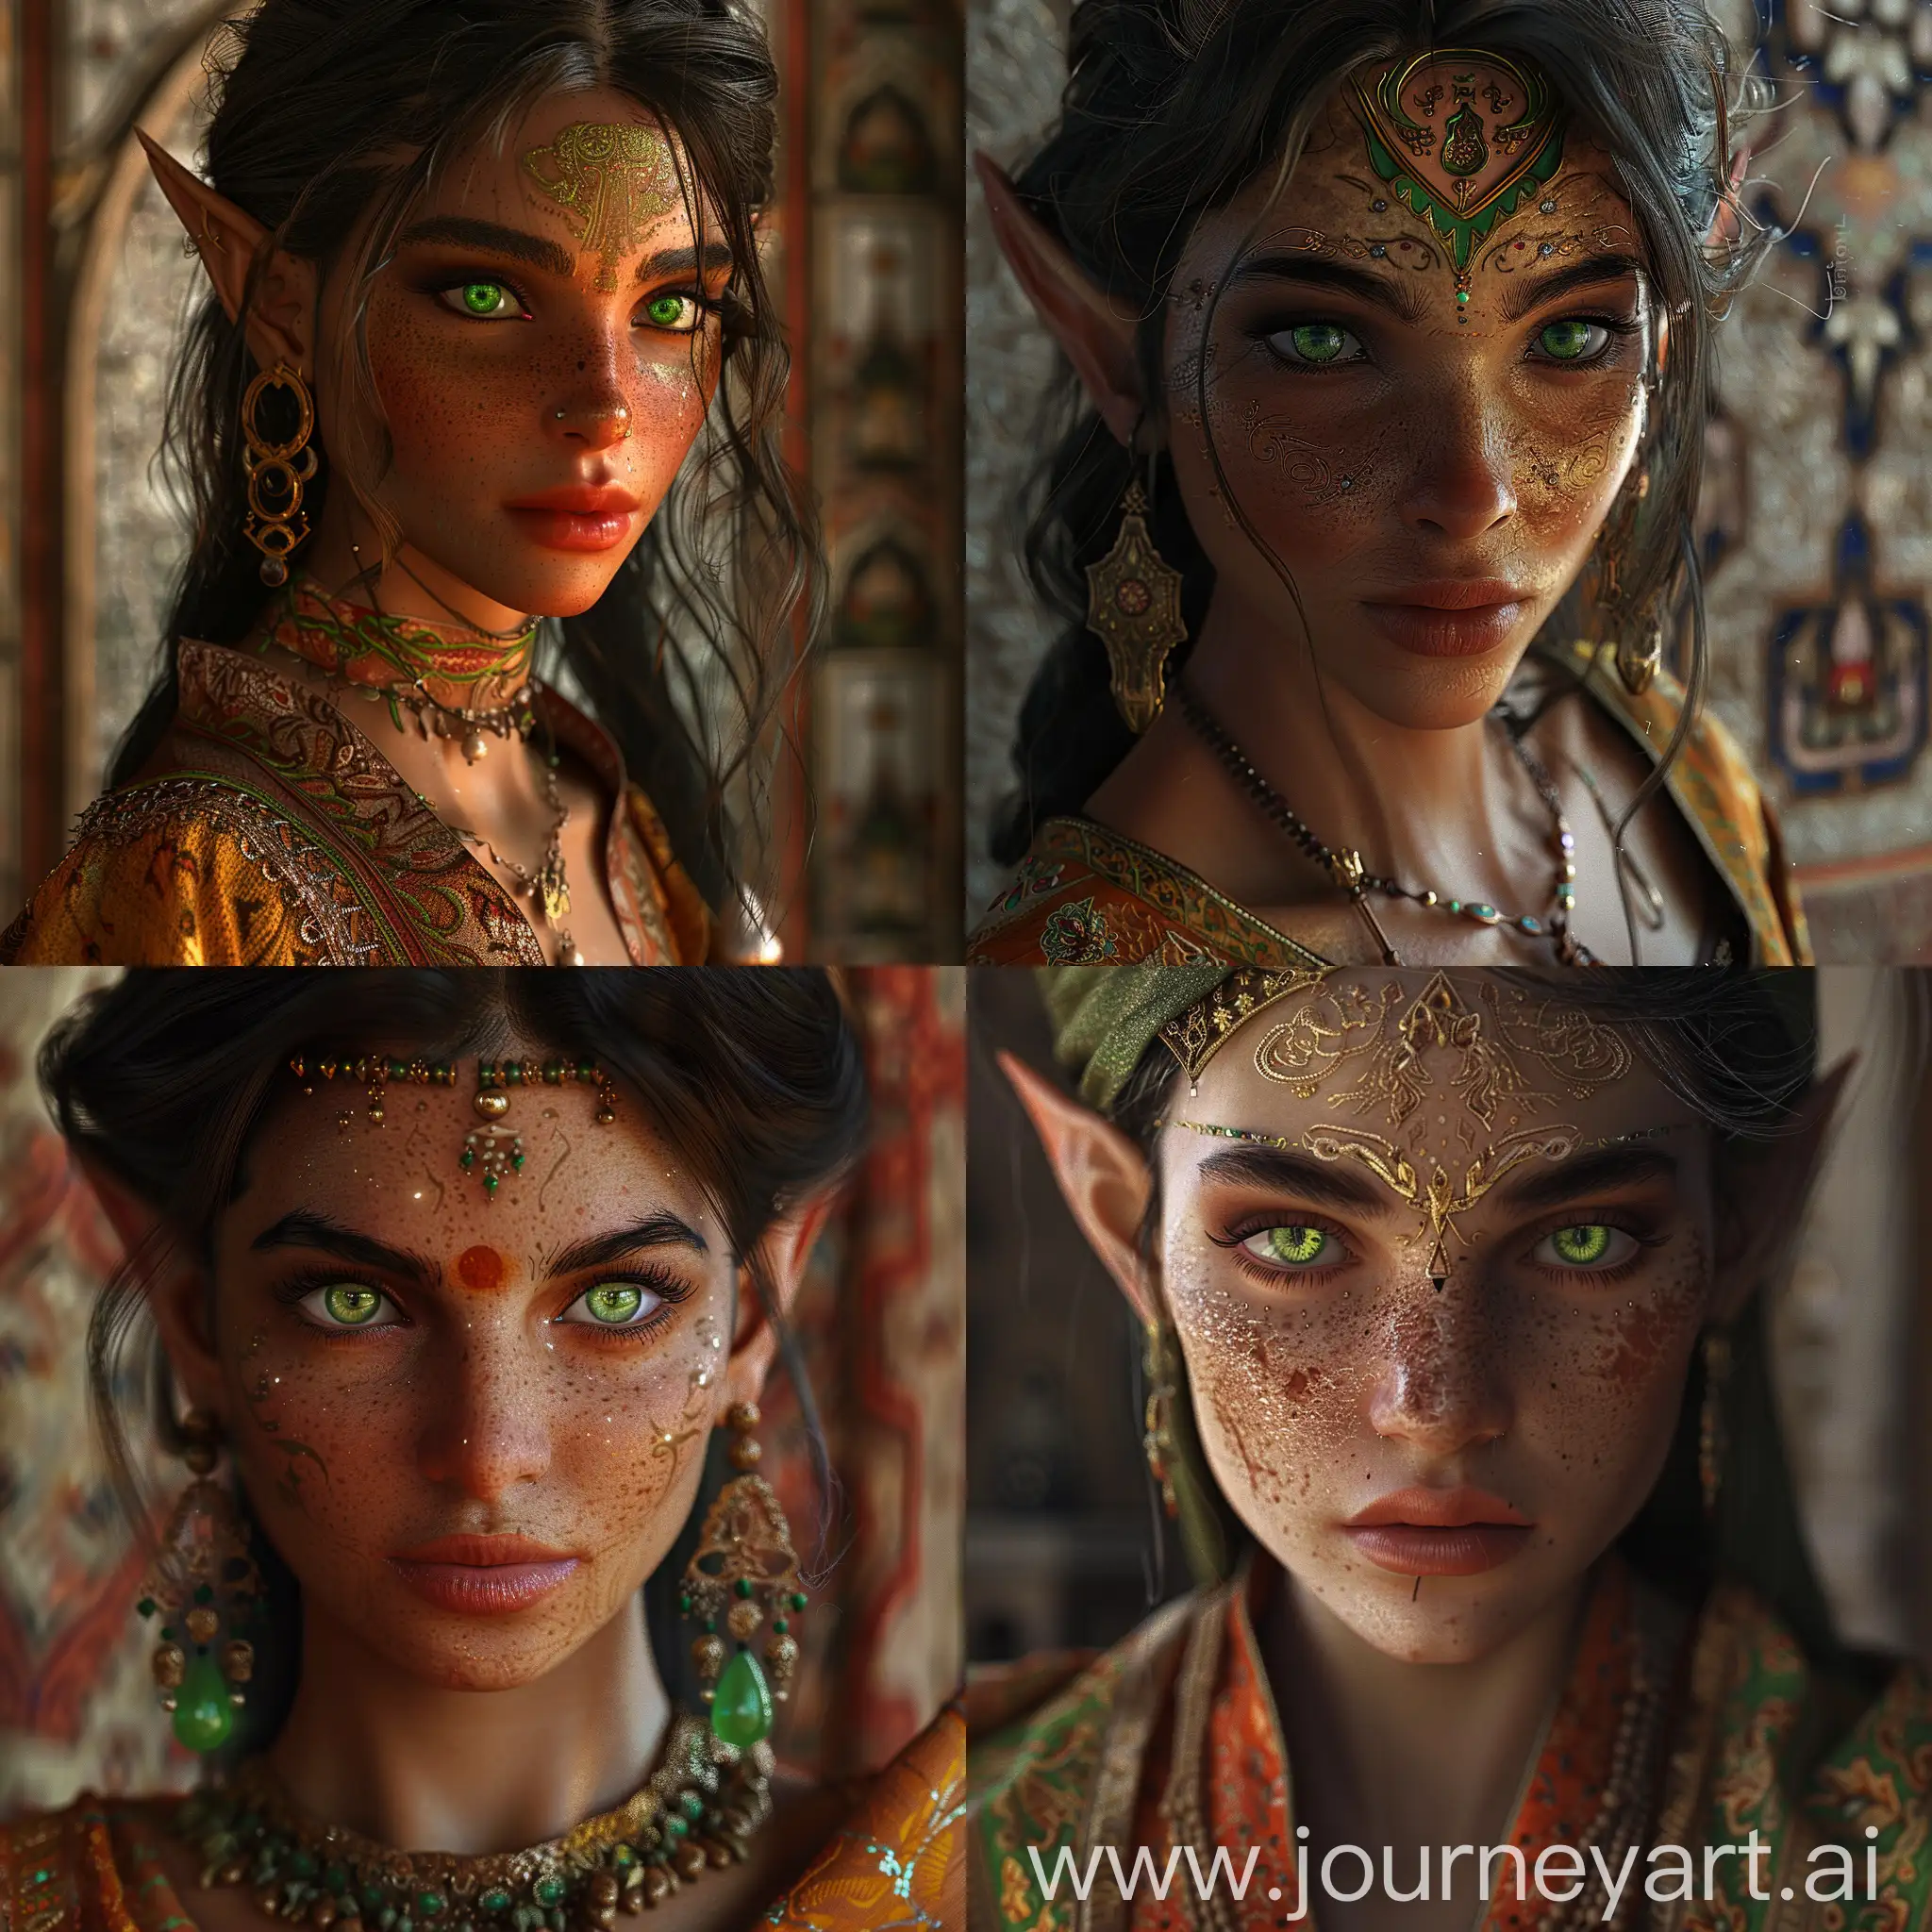 Medieval-Turkishstyled-Female-Elf-with-Cinematic-Realism